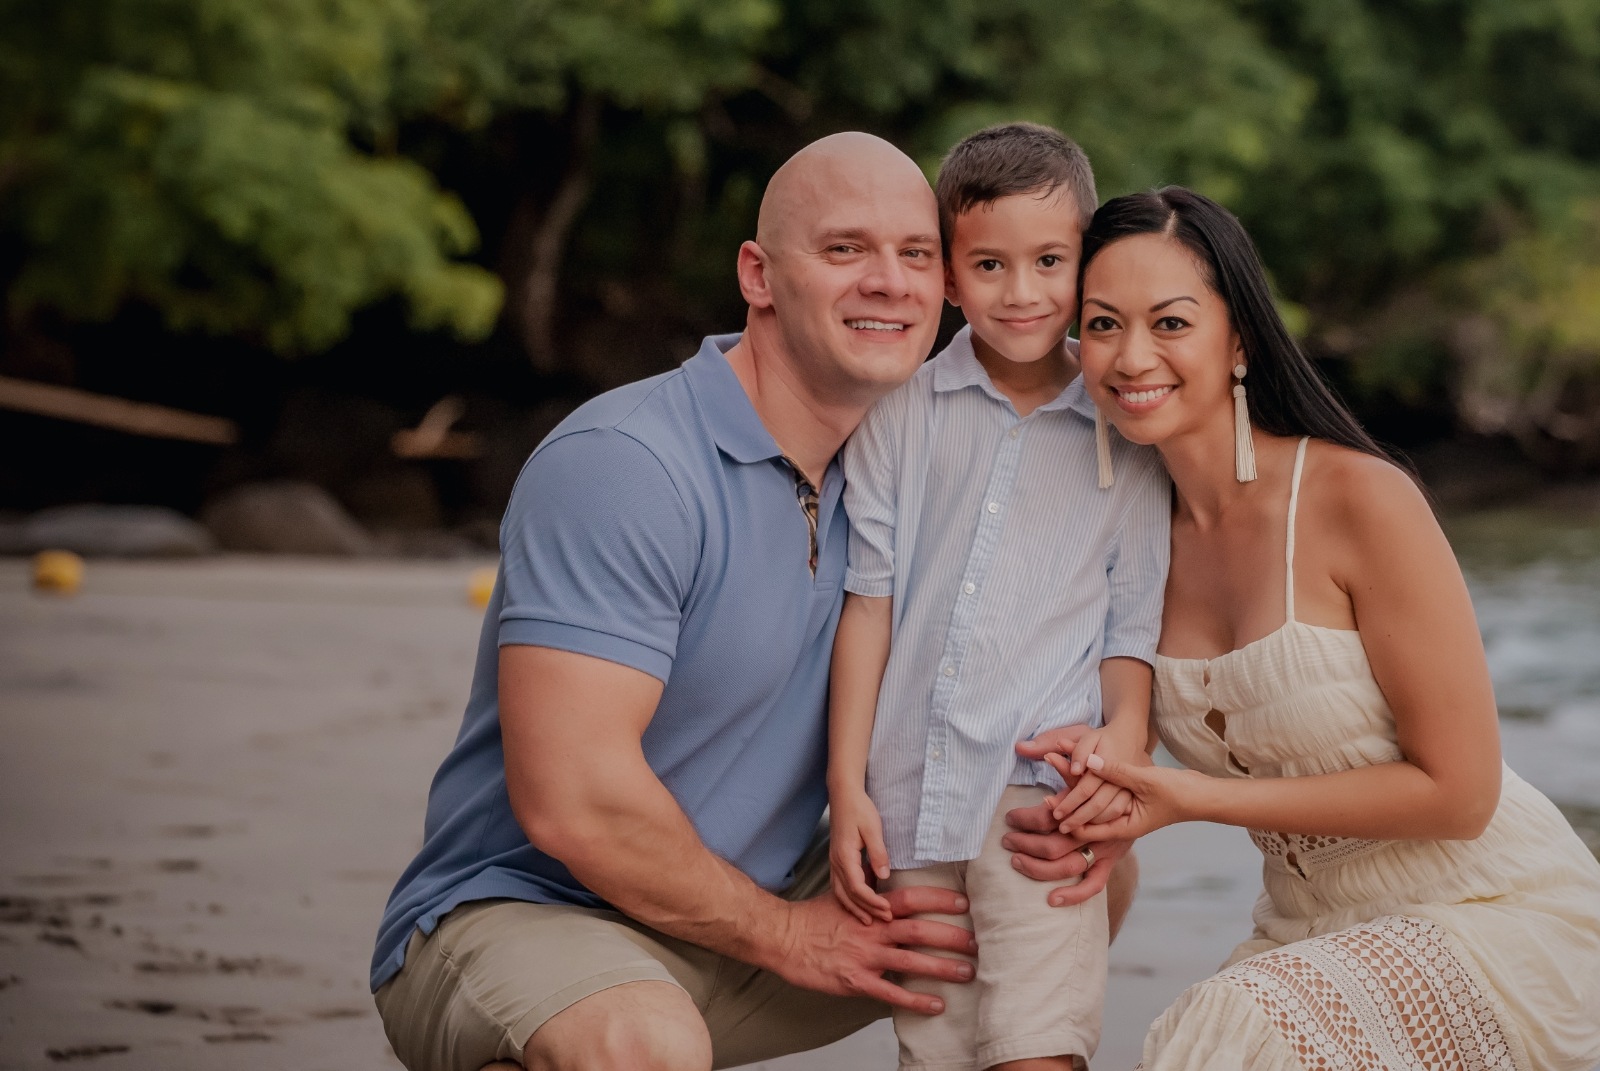 Naples Florida dentist Jeffrey Skupny D M D and his family